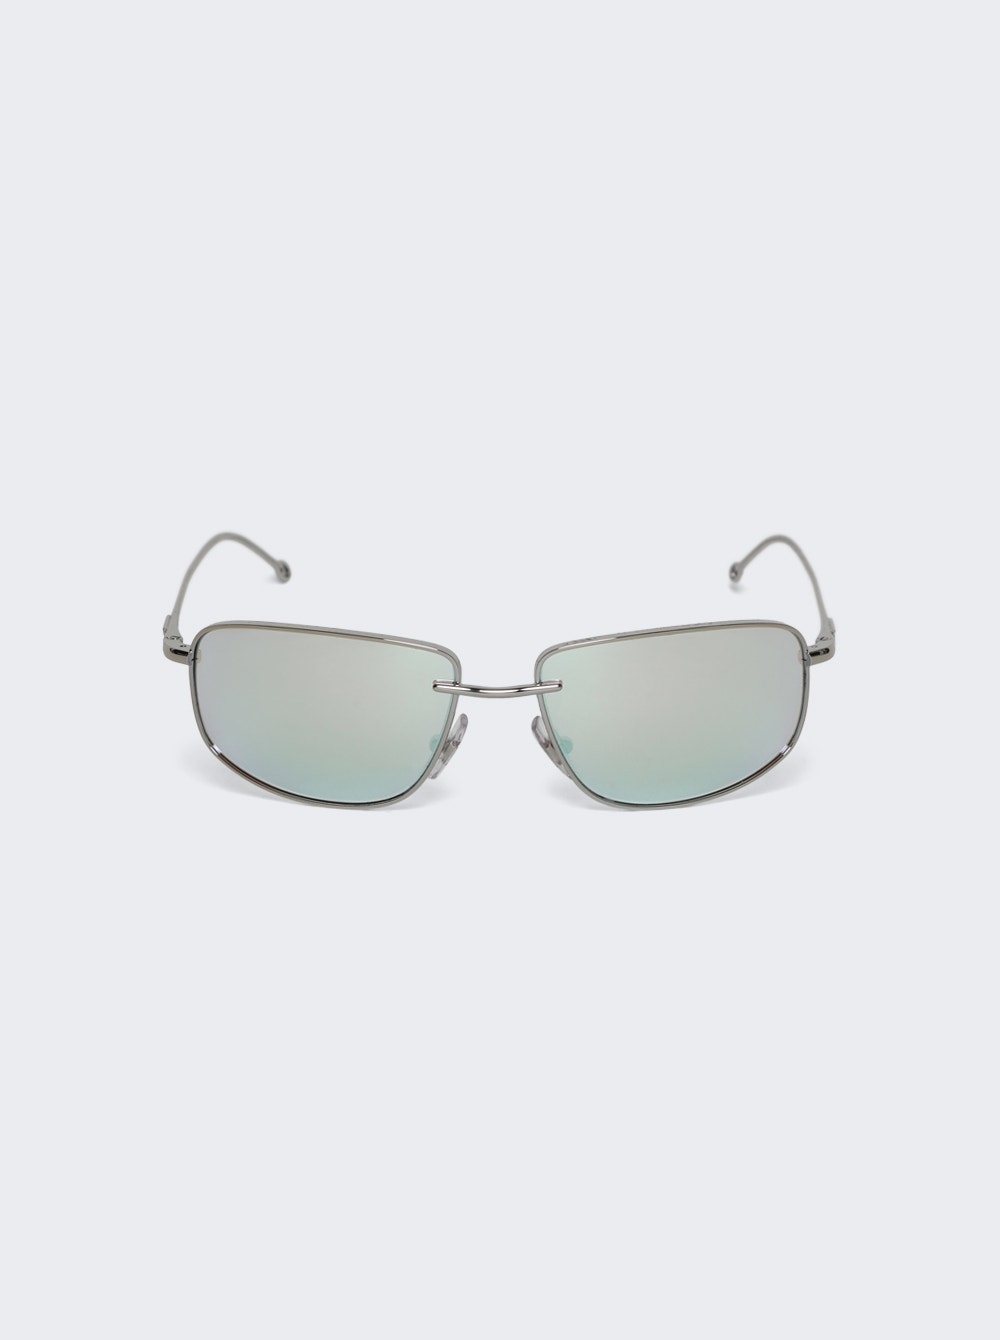 Lx1005 Sunglasses Shiny Silver - 1